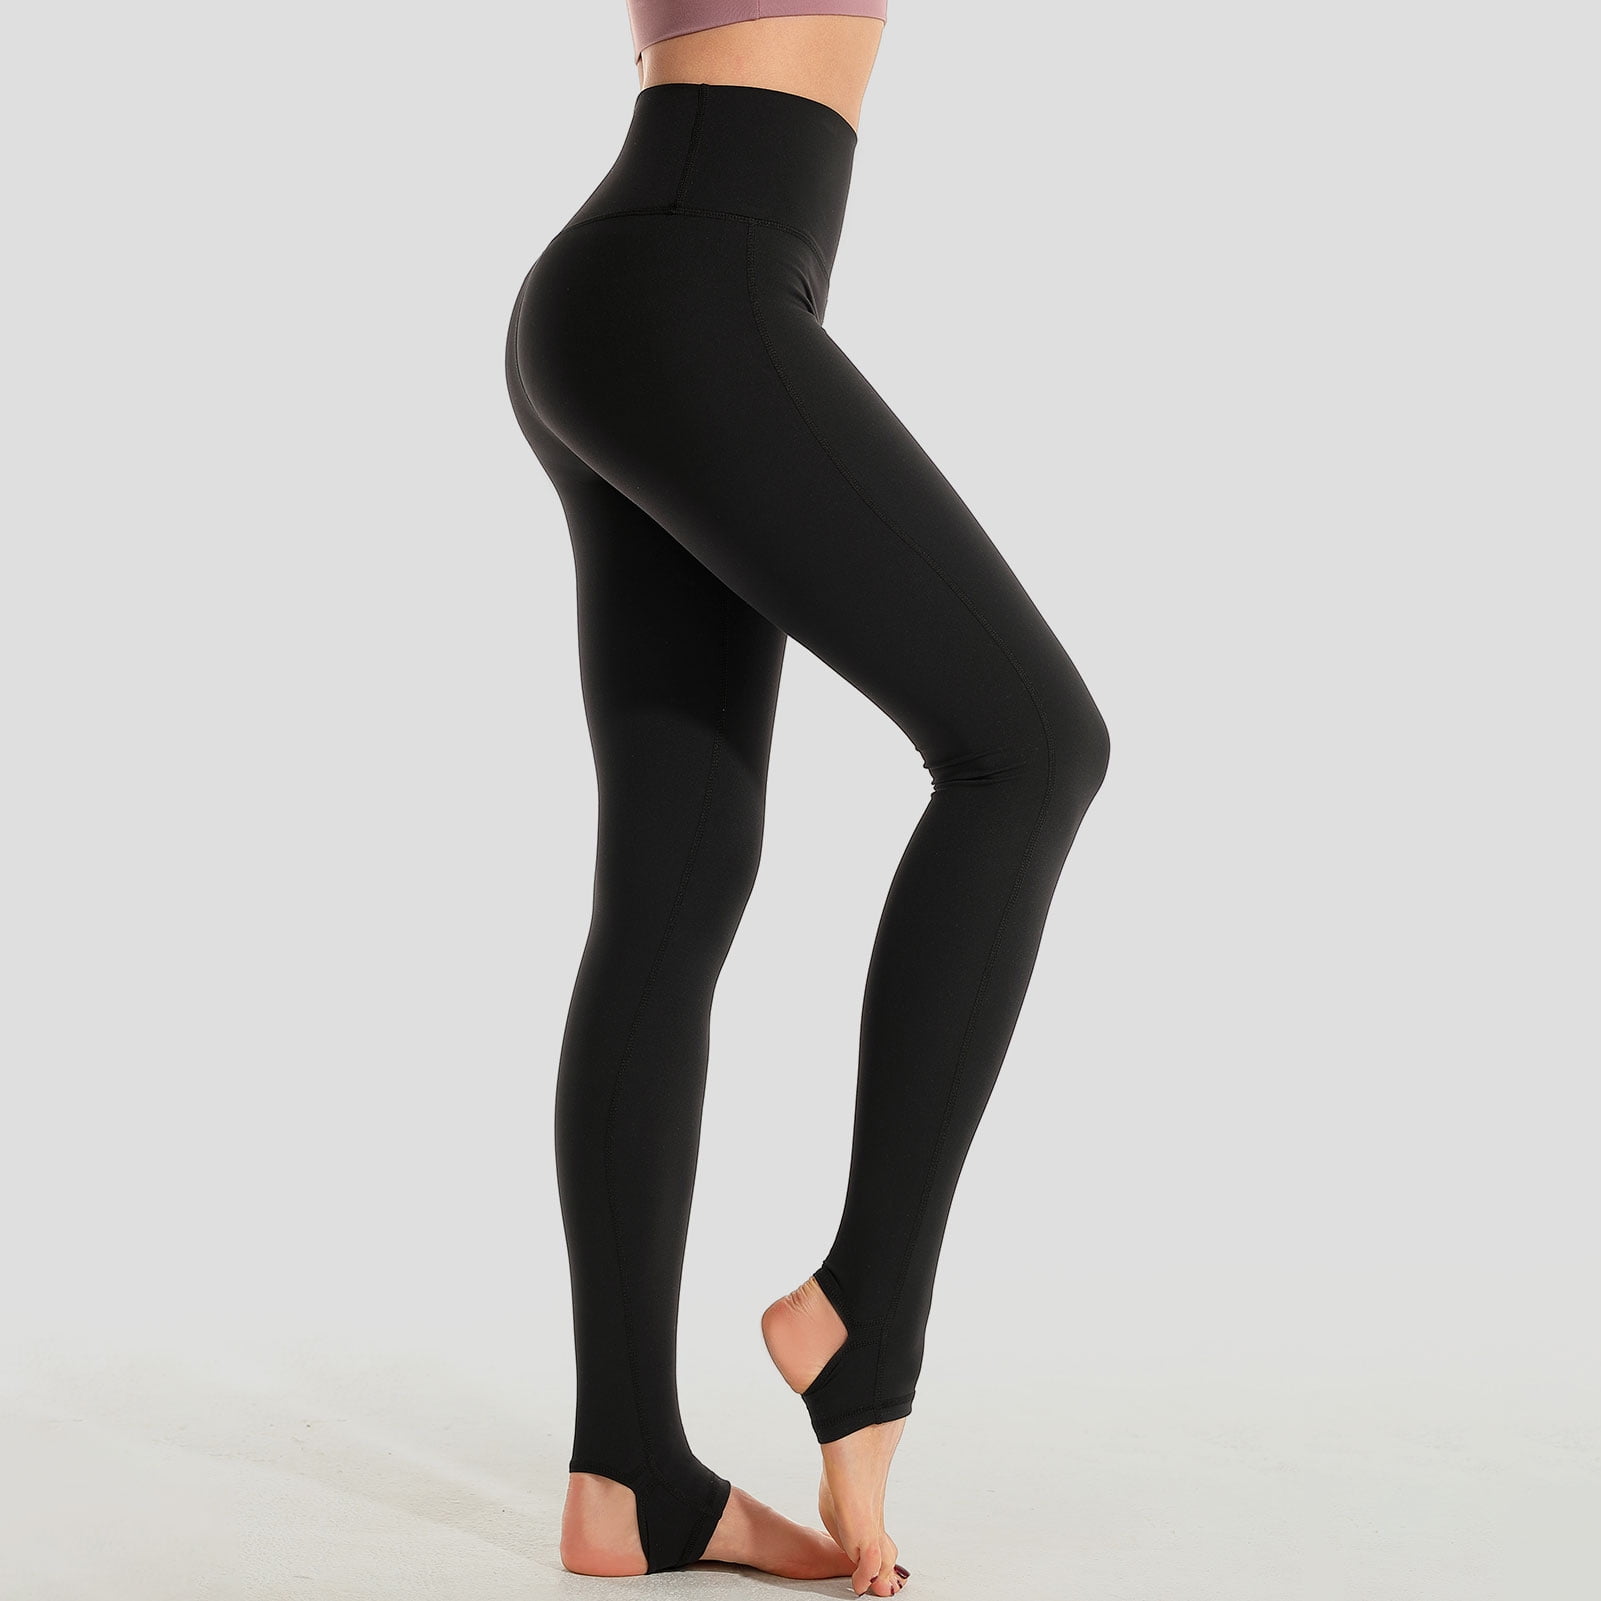 Women's Stretch Stirrup Leggings Sport/Yoga/Aerobics Quick Dry Skinny Pants S~XL 